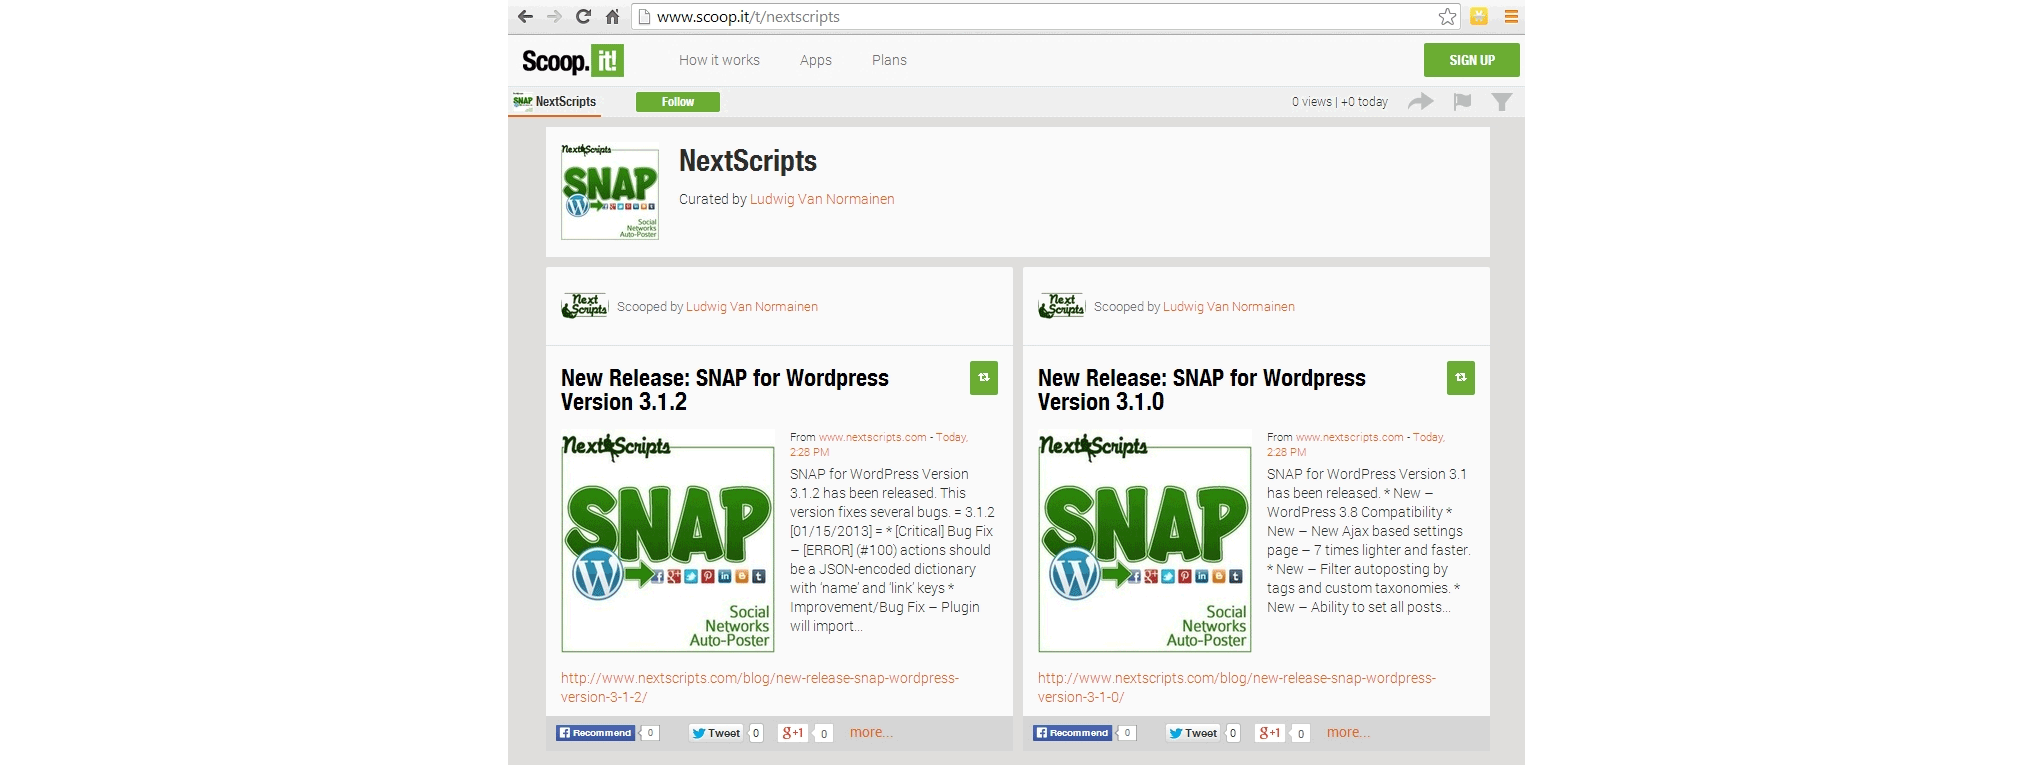 New Release: SNAP for Wordpress Version 3.2 - NextScripts